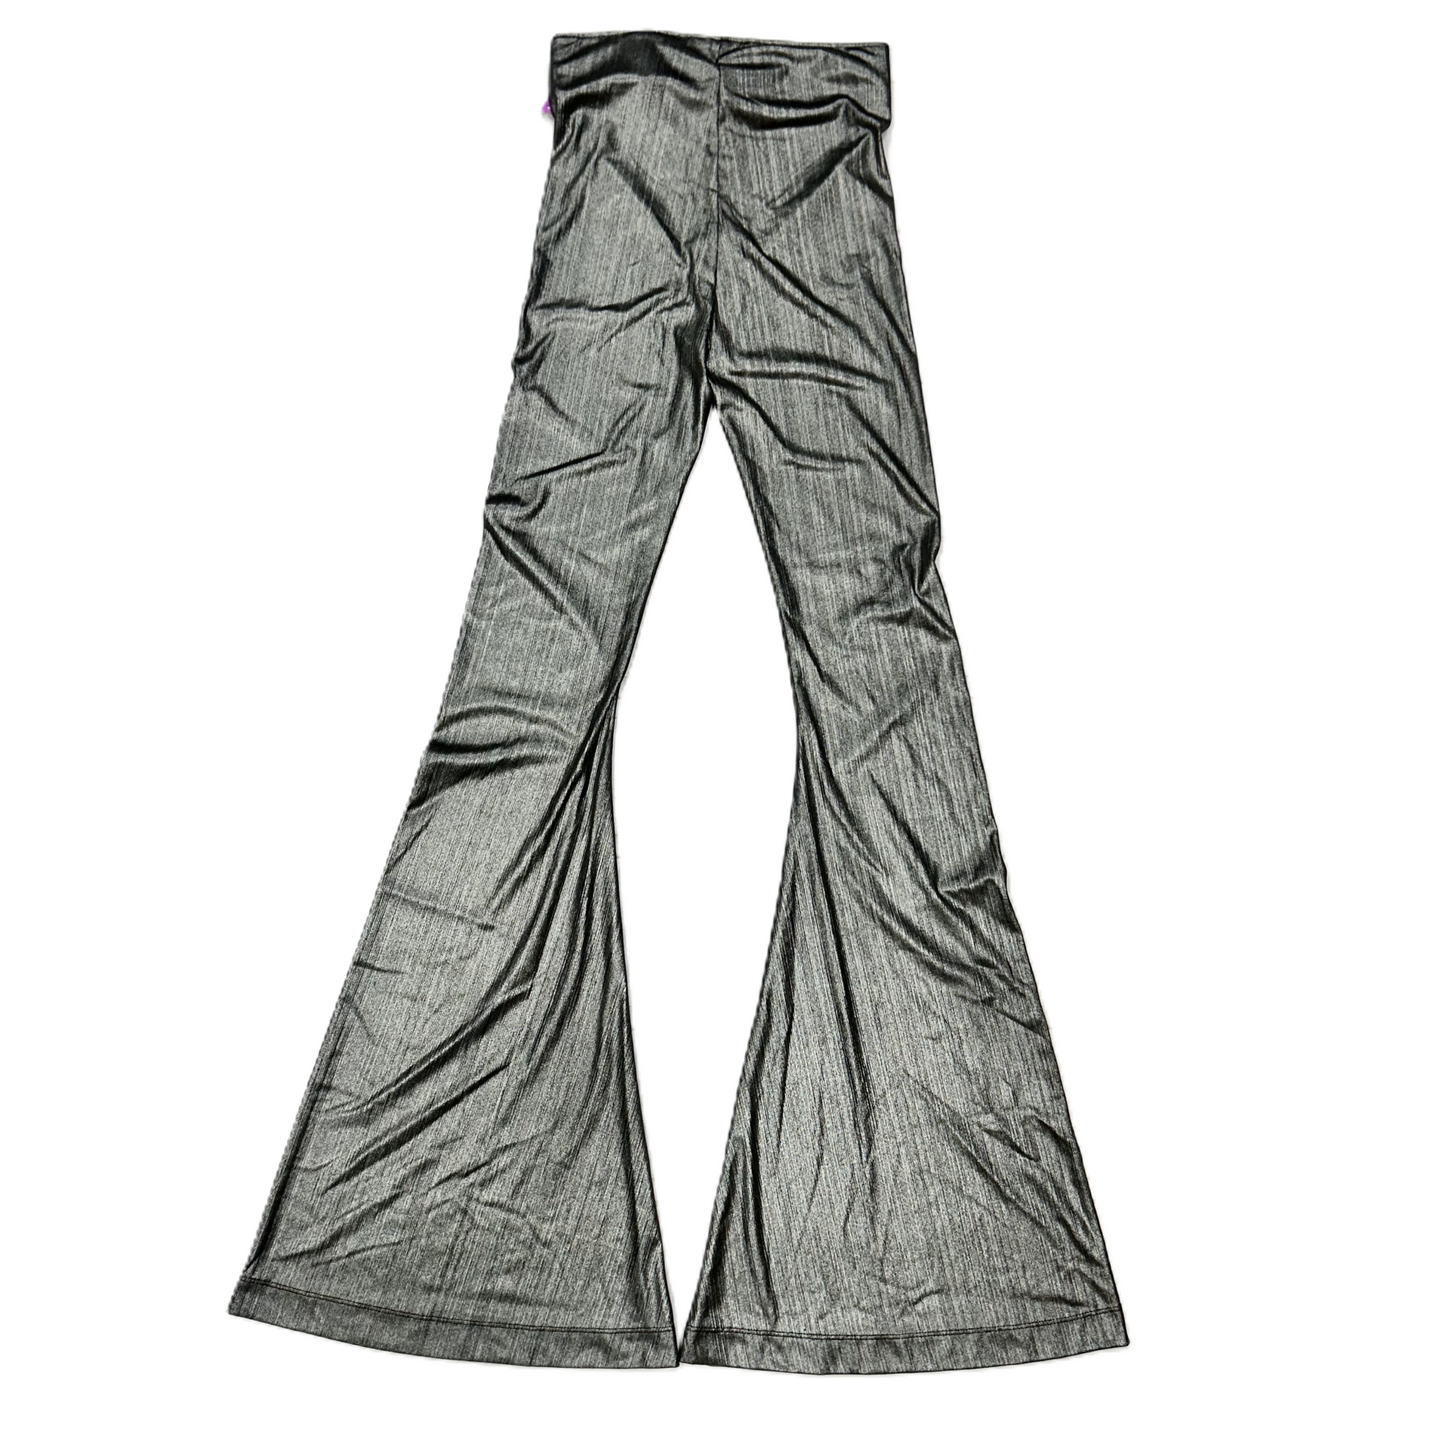 Silver Pants Designer By Show Me Your Mumu, Size: S